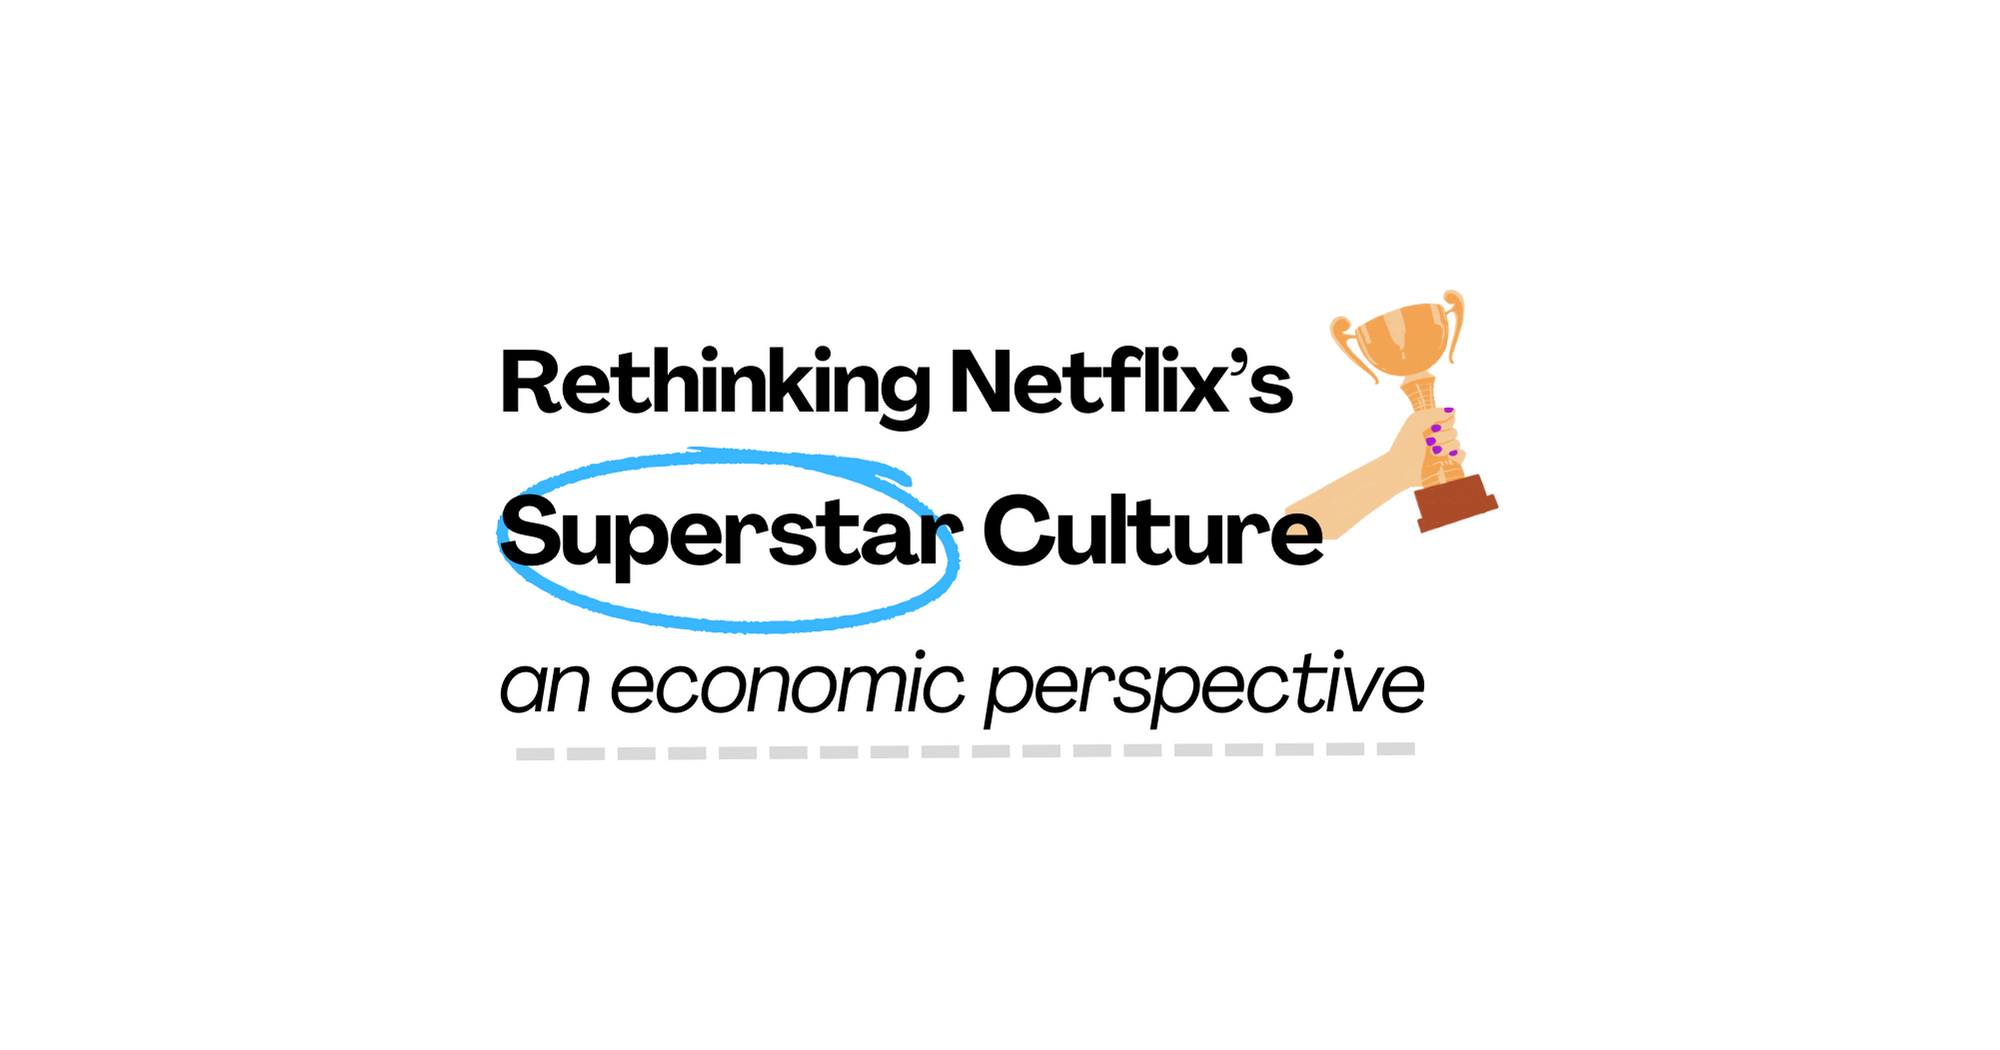 Rethinking Netflix’s Superstar Culture - an economic perspective